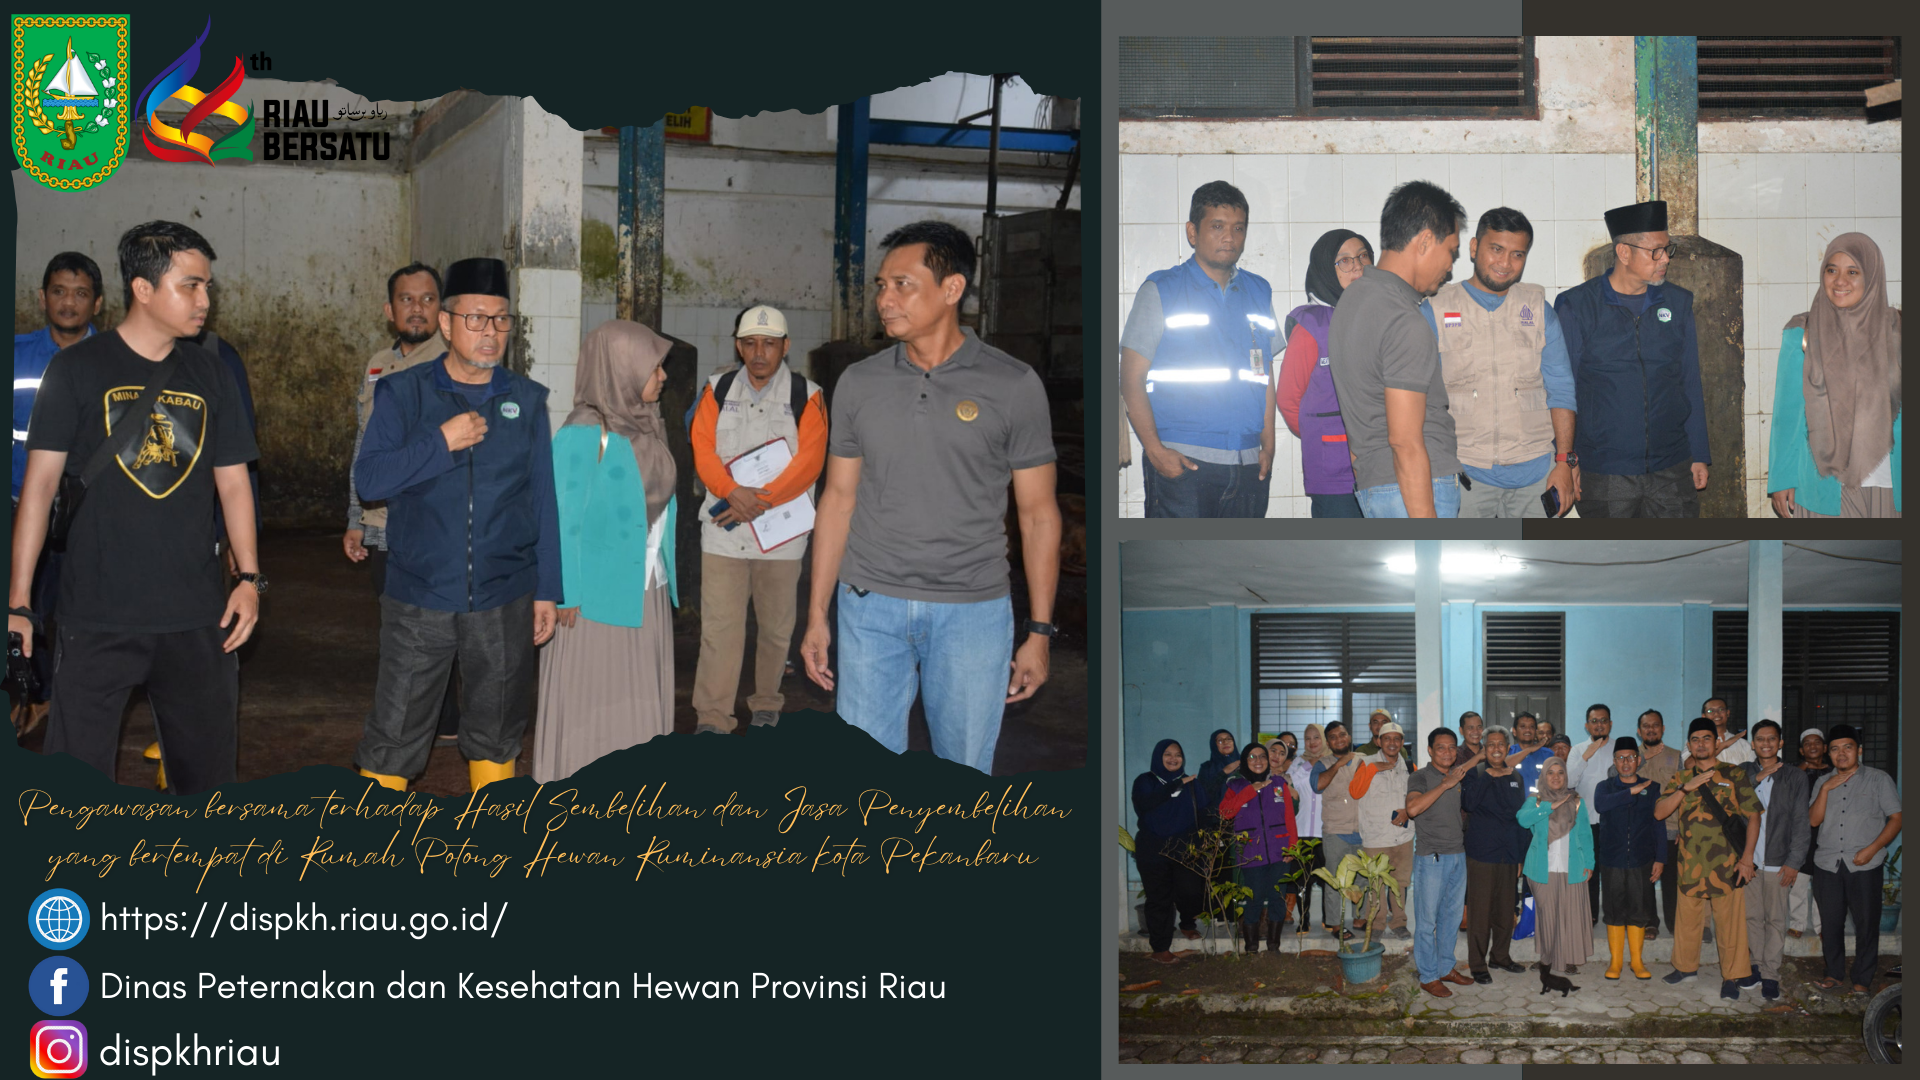 Pengawasan bersama terhadap Hasil Sembelihan dan Jasa Penyembelihan yang bertempat di Rumah Potong Hewan Ruminansia kota Pekanbaru